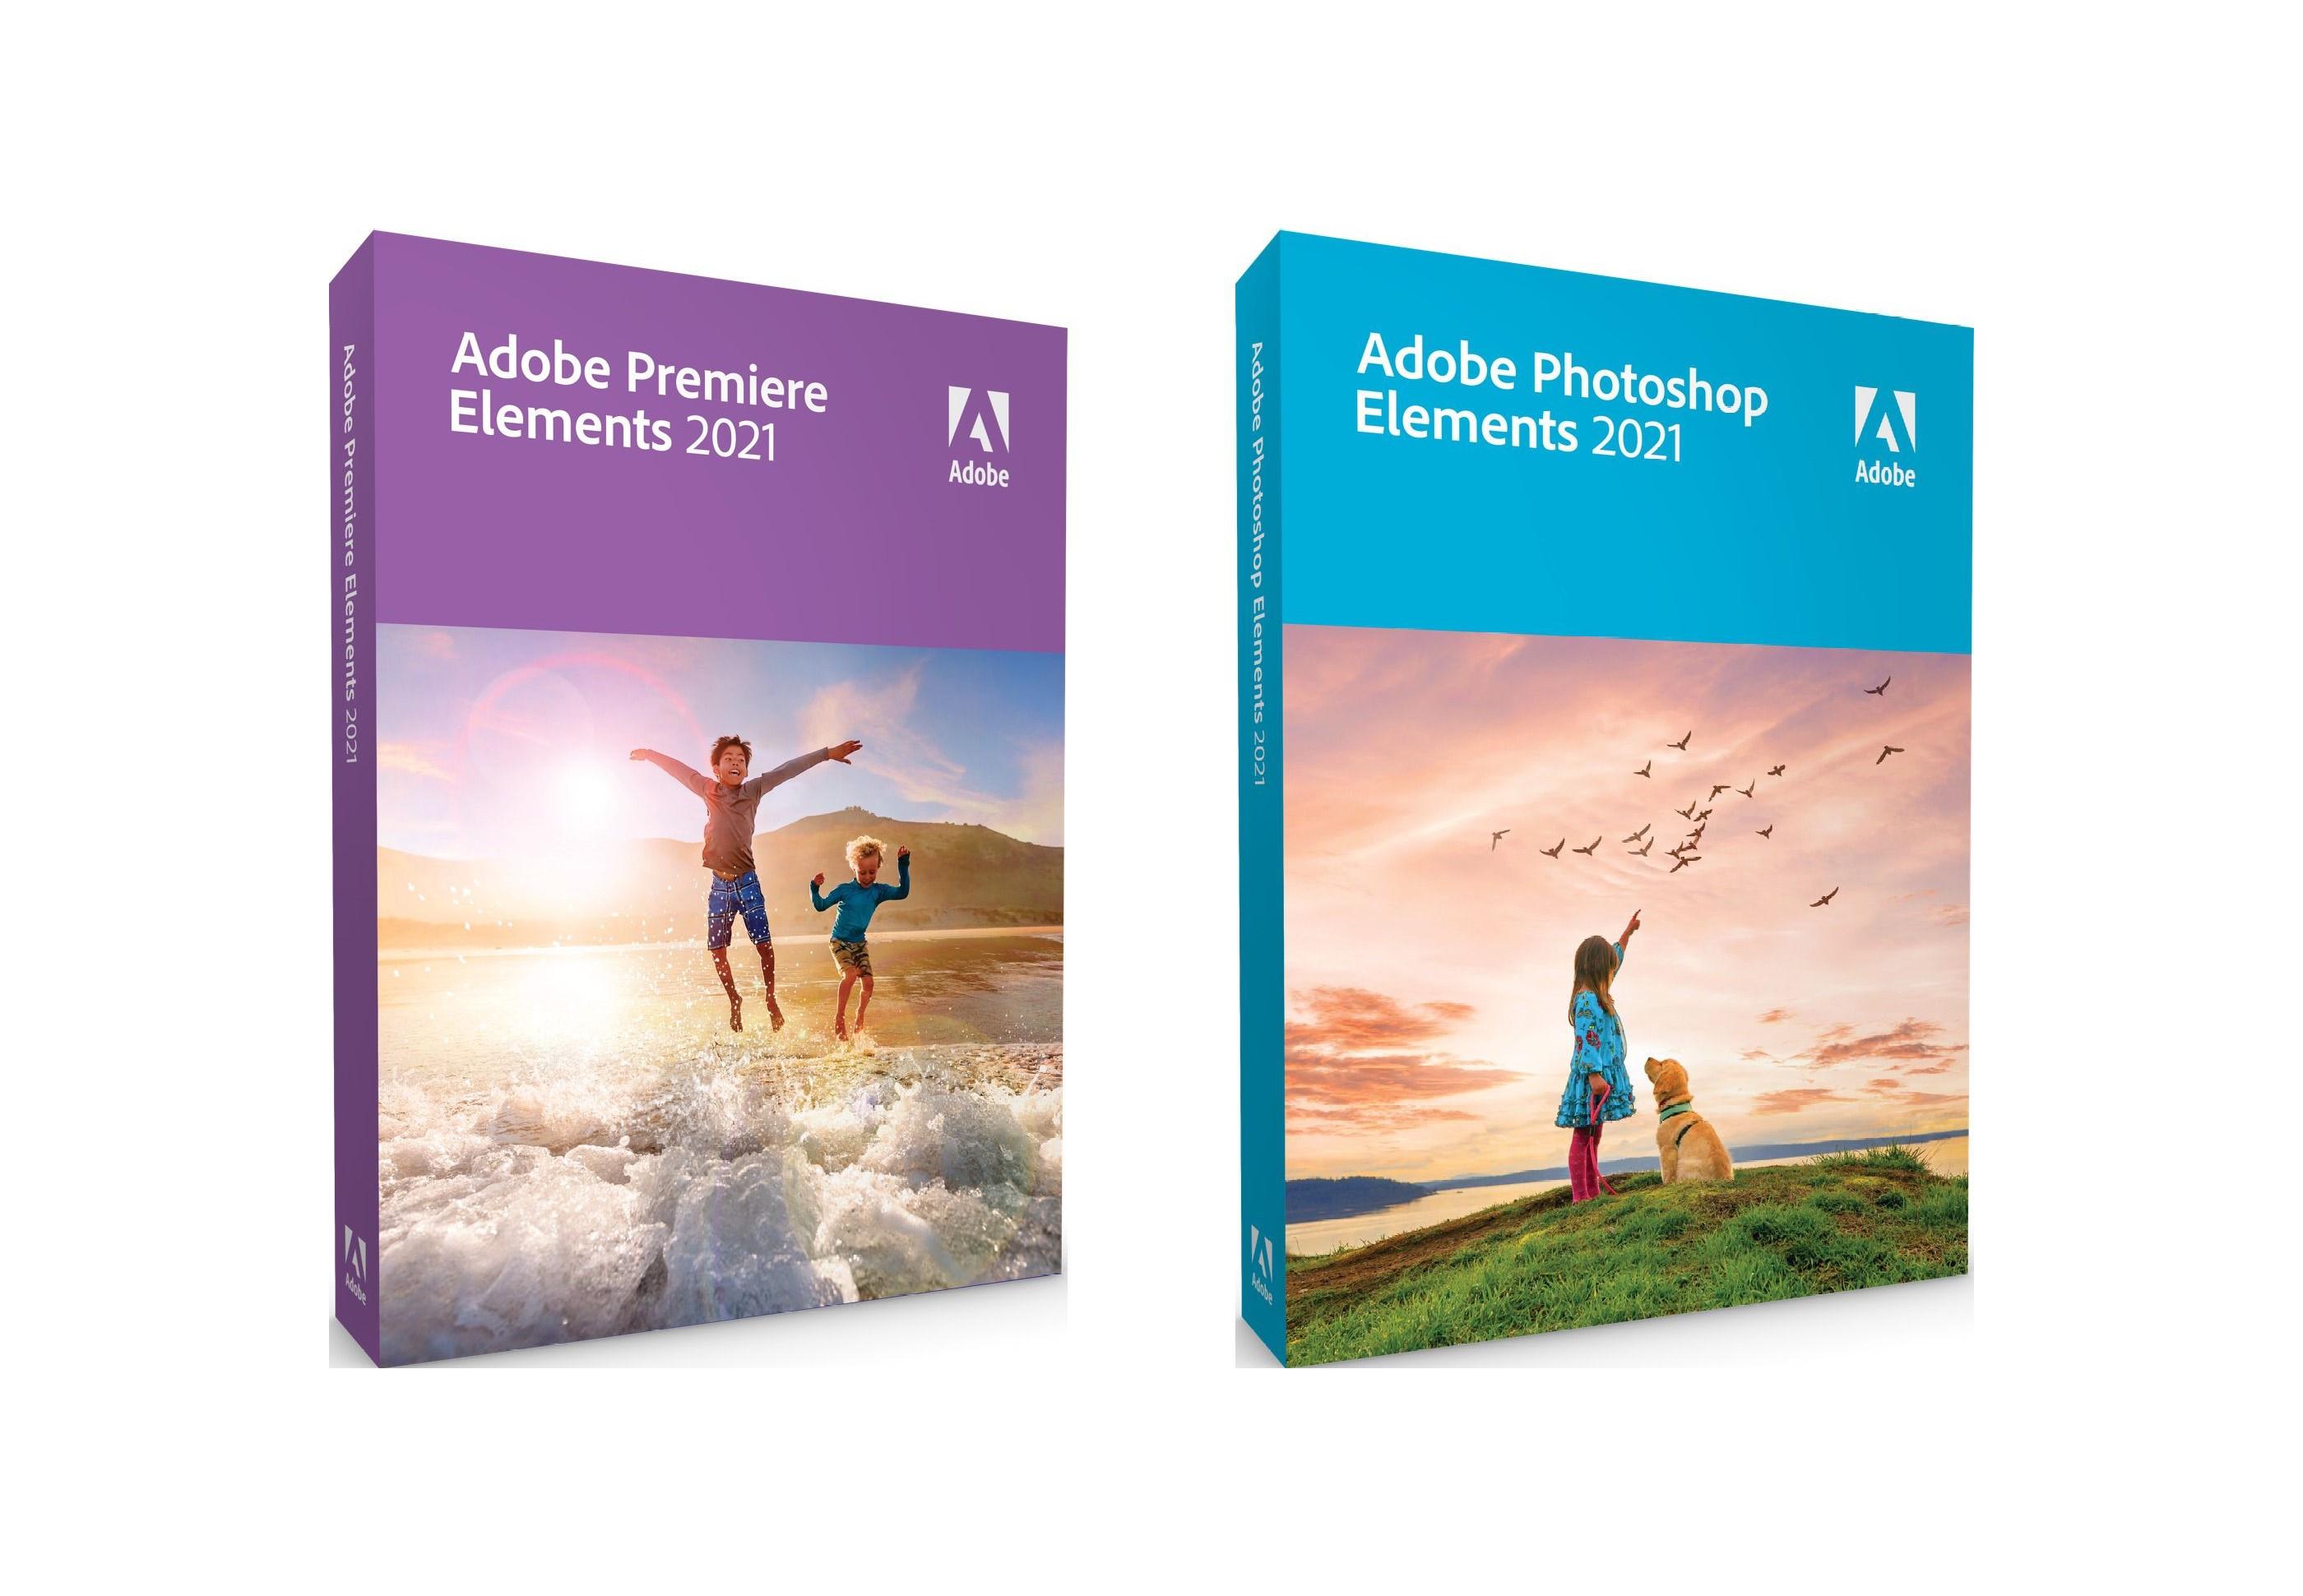 Adobe Photoshop Elements & Premiere Elements 2021 Full Version For Windows